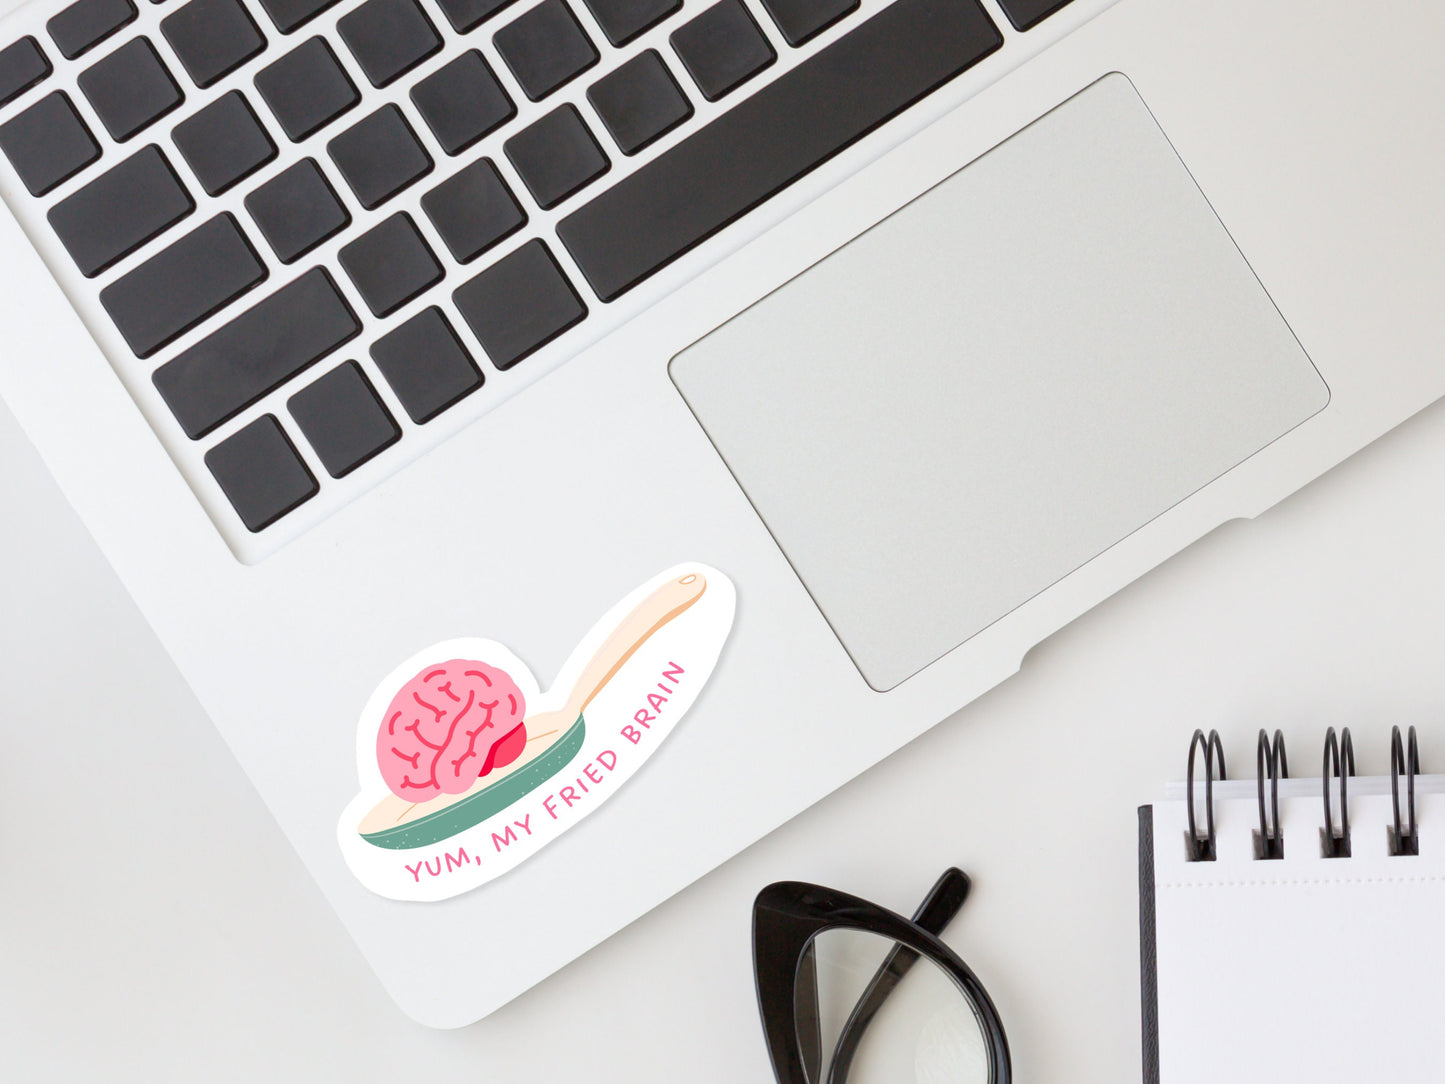 Yum, My Fried Brain Sticker | Funny Laptop Decals | Aesthetic Sticker